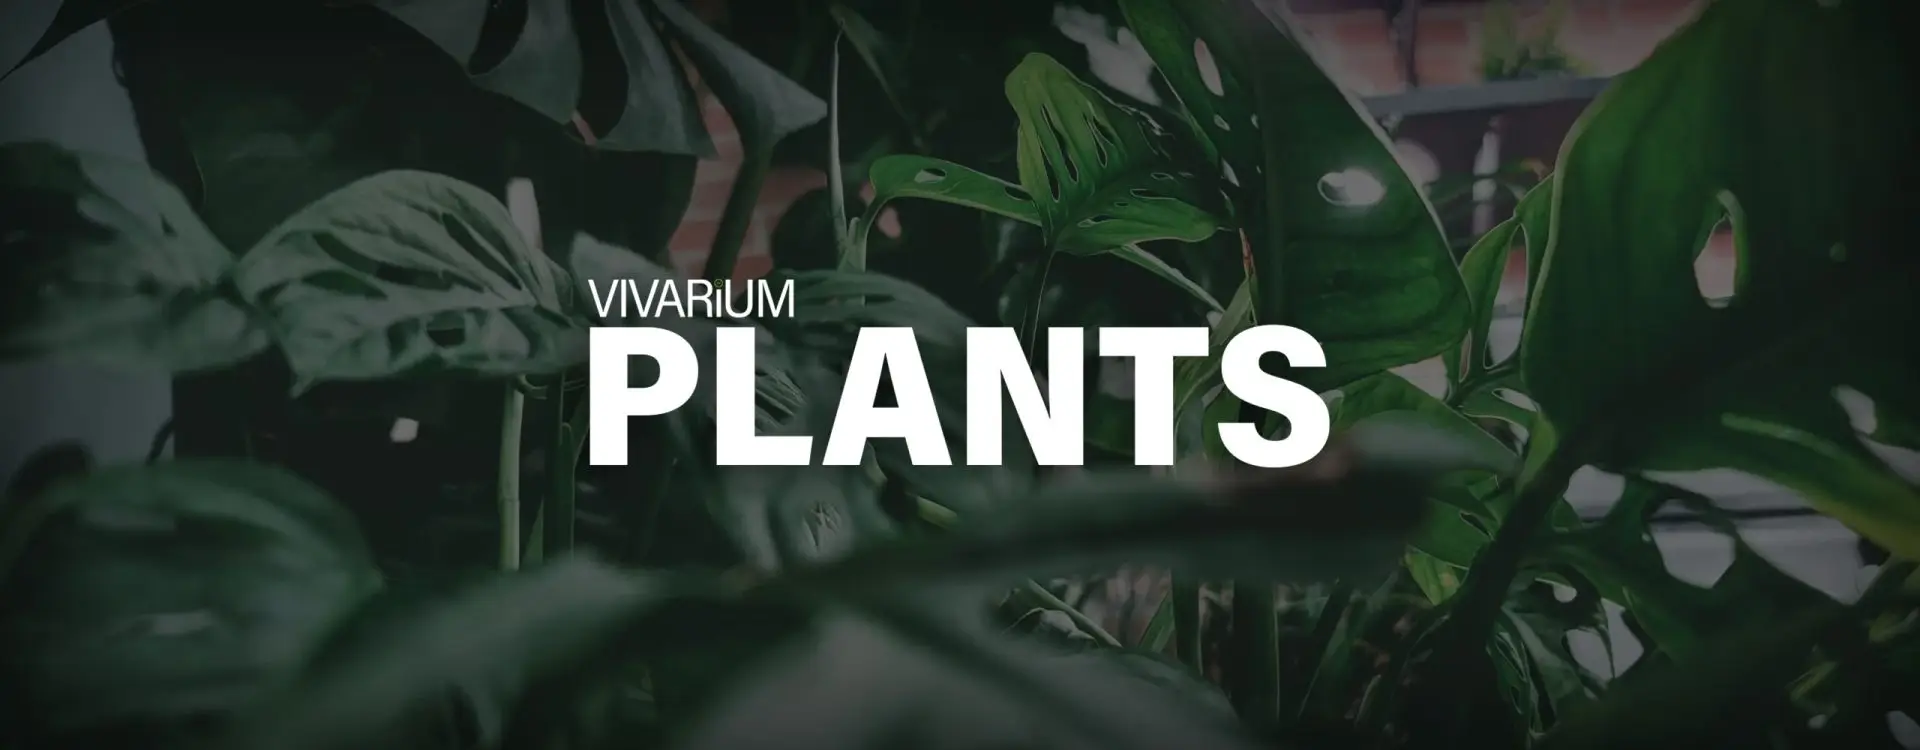 Vivarium Plants